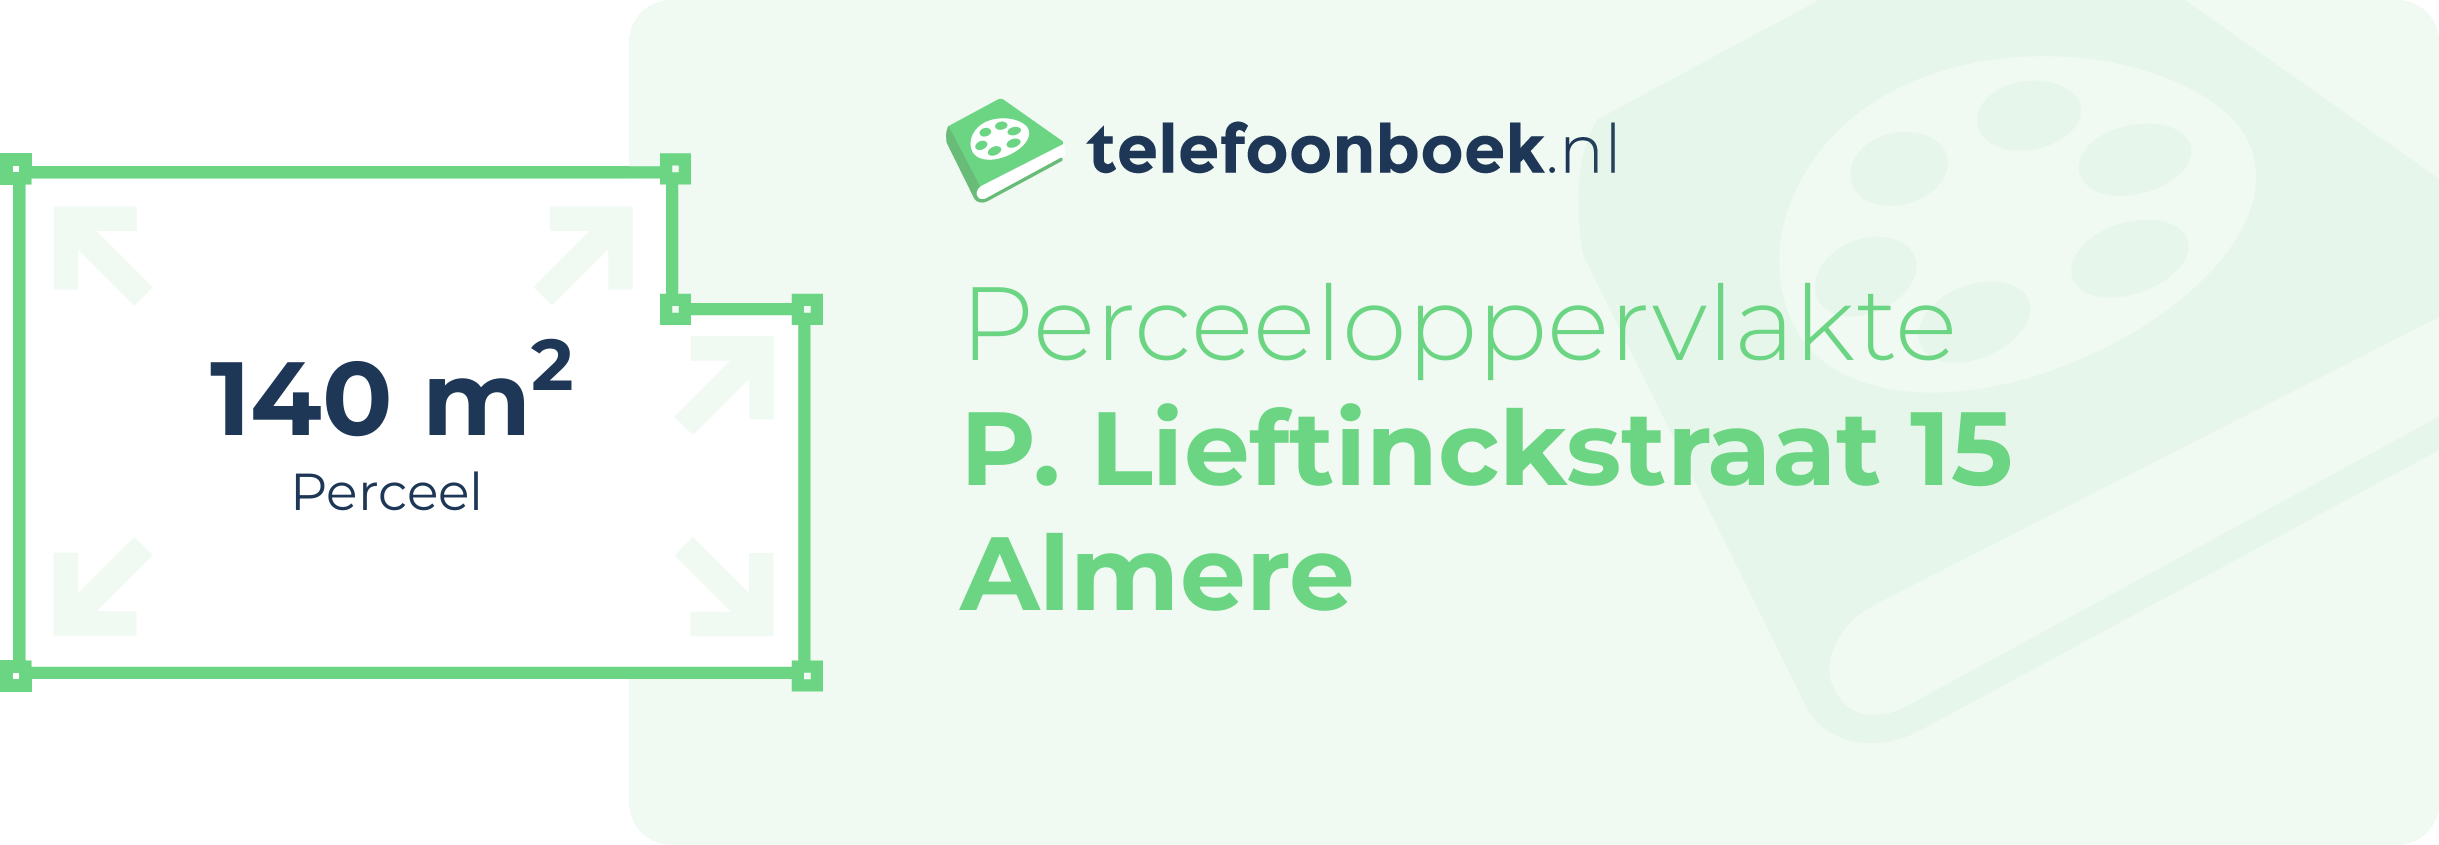 Perceeloppervlakte P. Lieftinckstraat 15 Almere